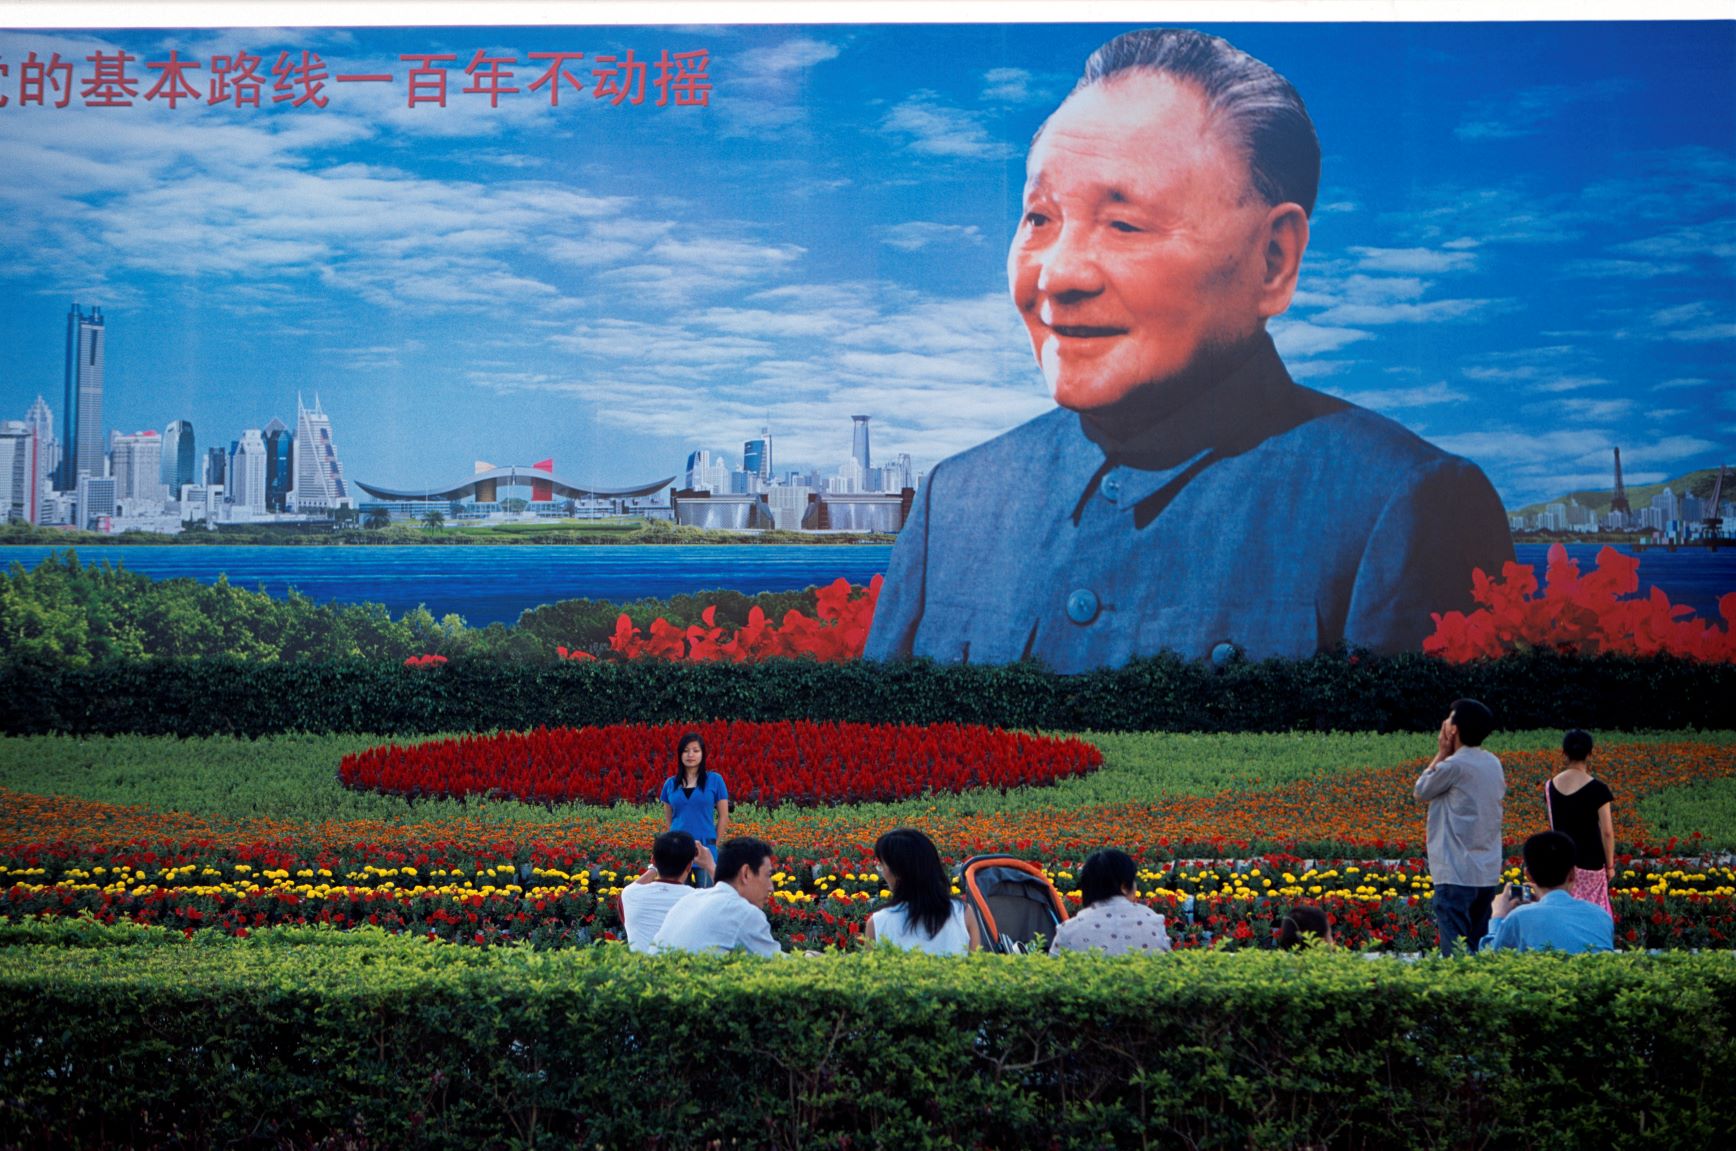 Реформа открытости в китае. Дэн Сяопин. Китайский плакат Дэн Сяопин. Дэн Сяопина в Китае. Китайские реформы Дэн Сяопина.